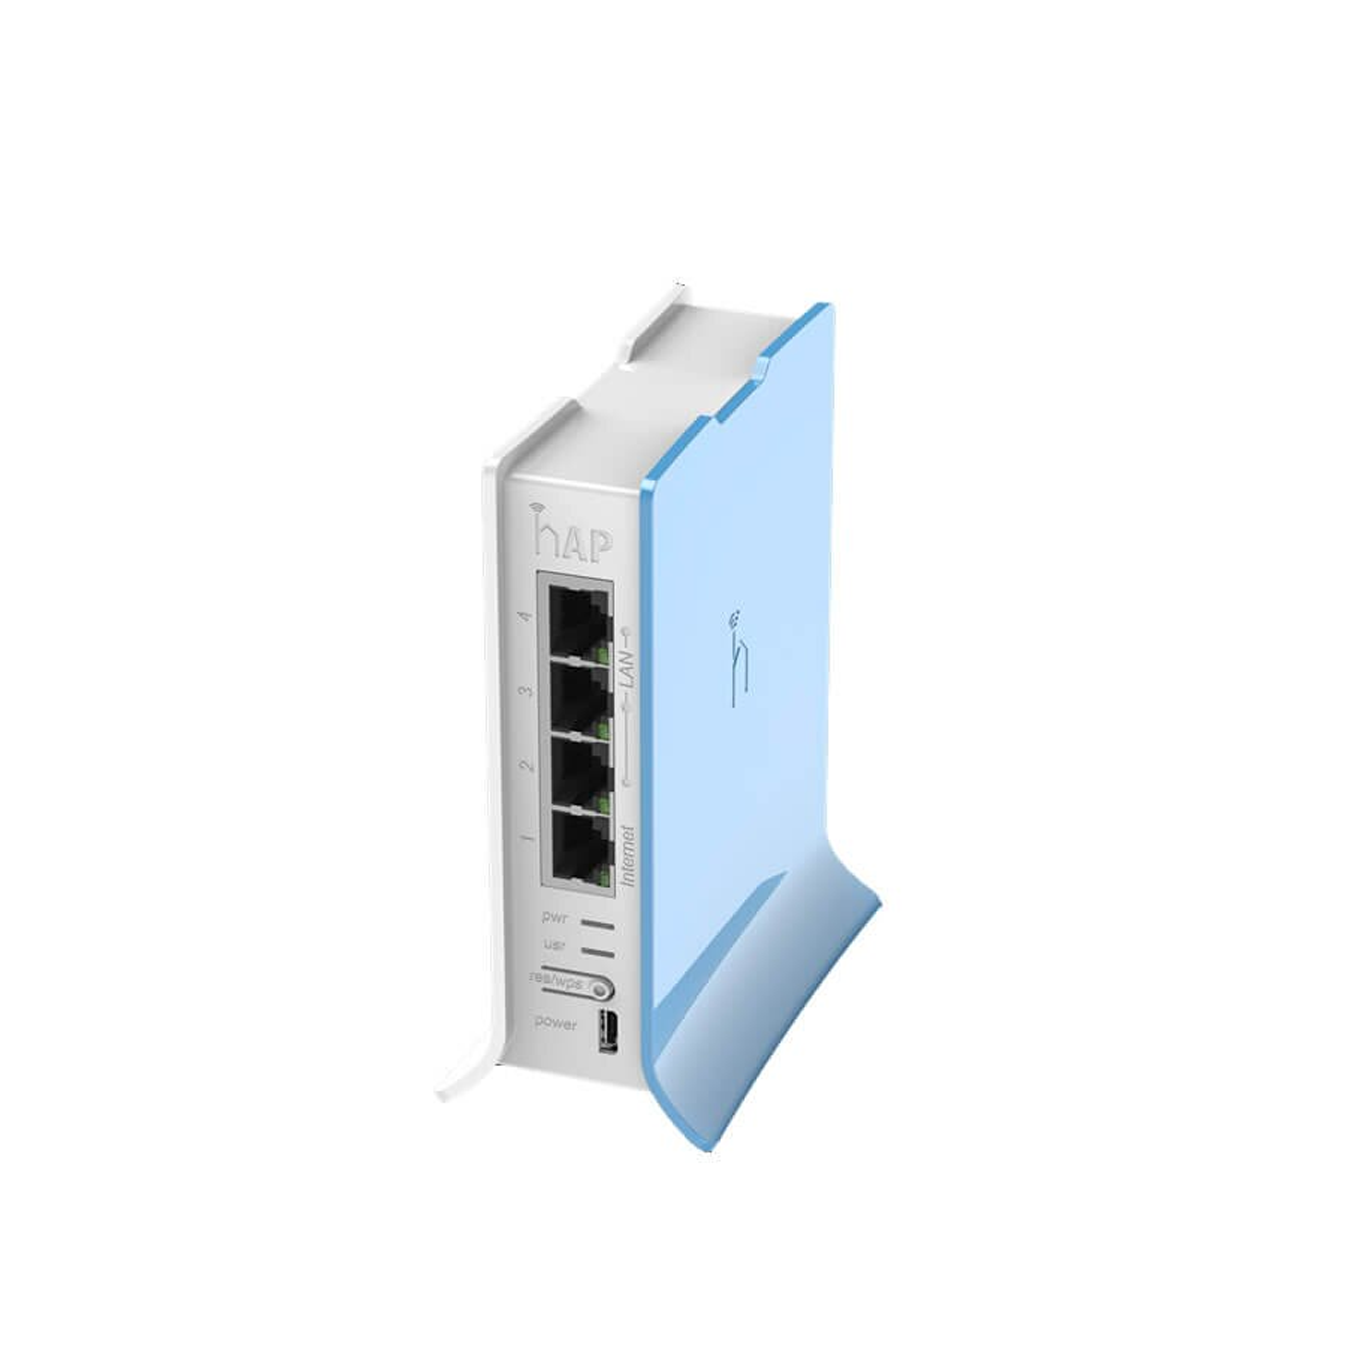 Router board HAP Lite con 650Mhz CPU con antenas integradas Marca: MikroTik